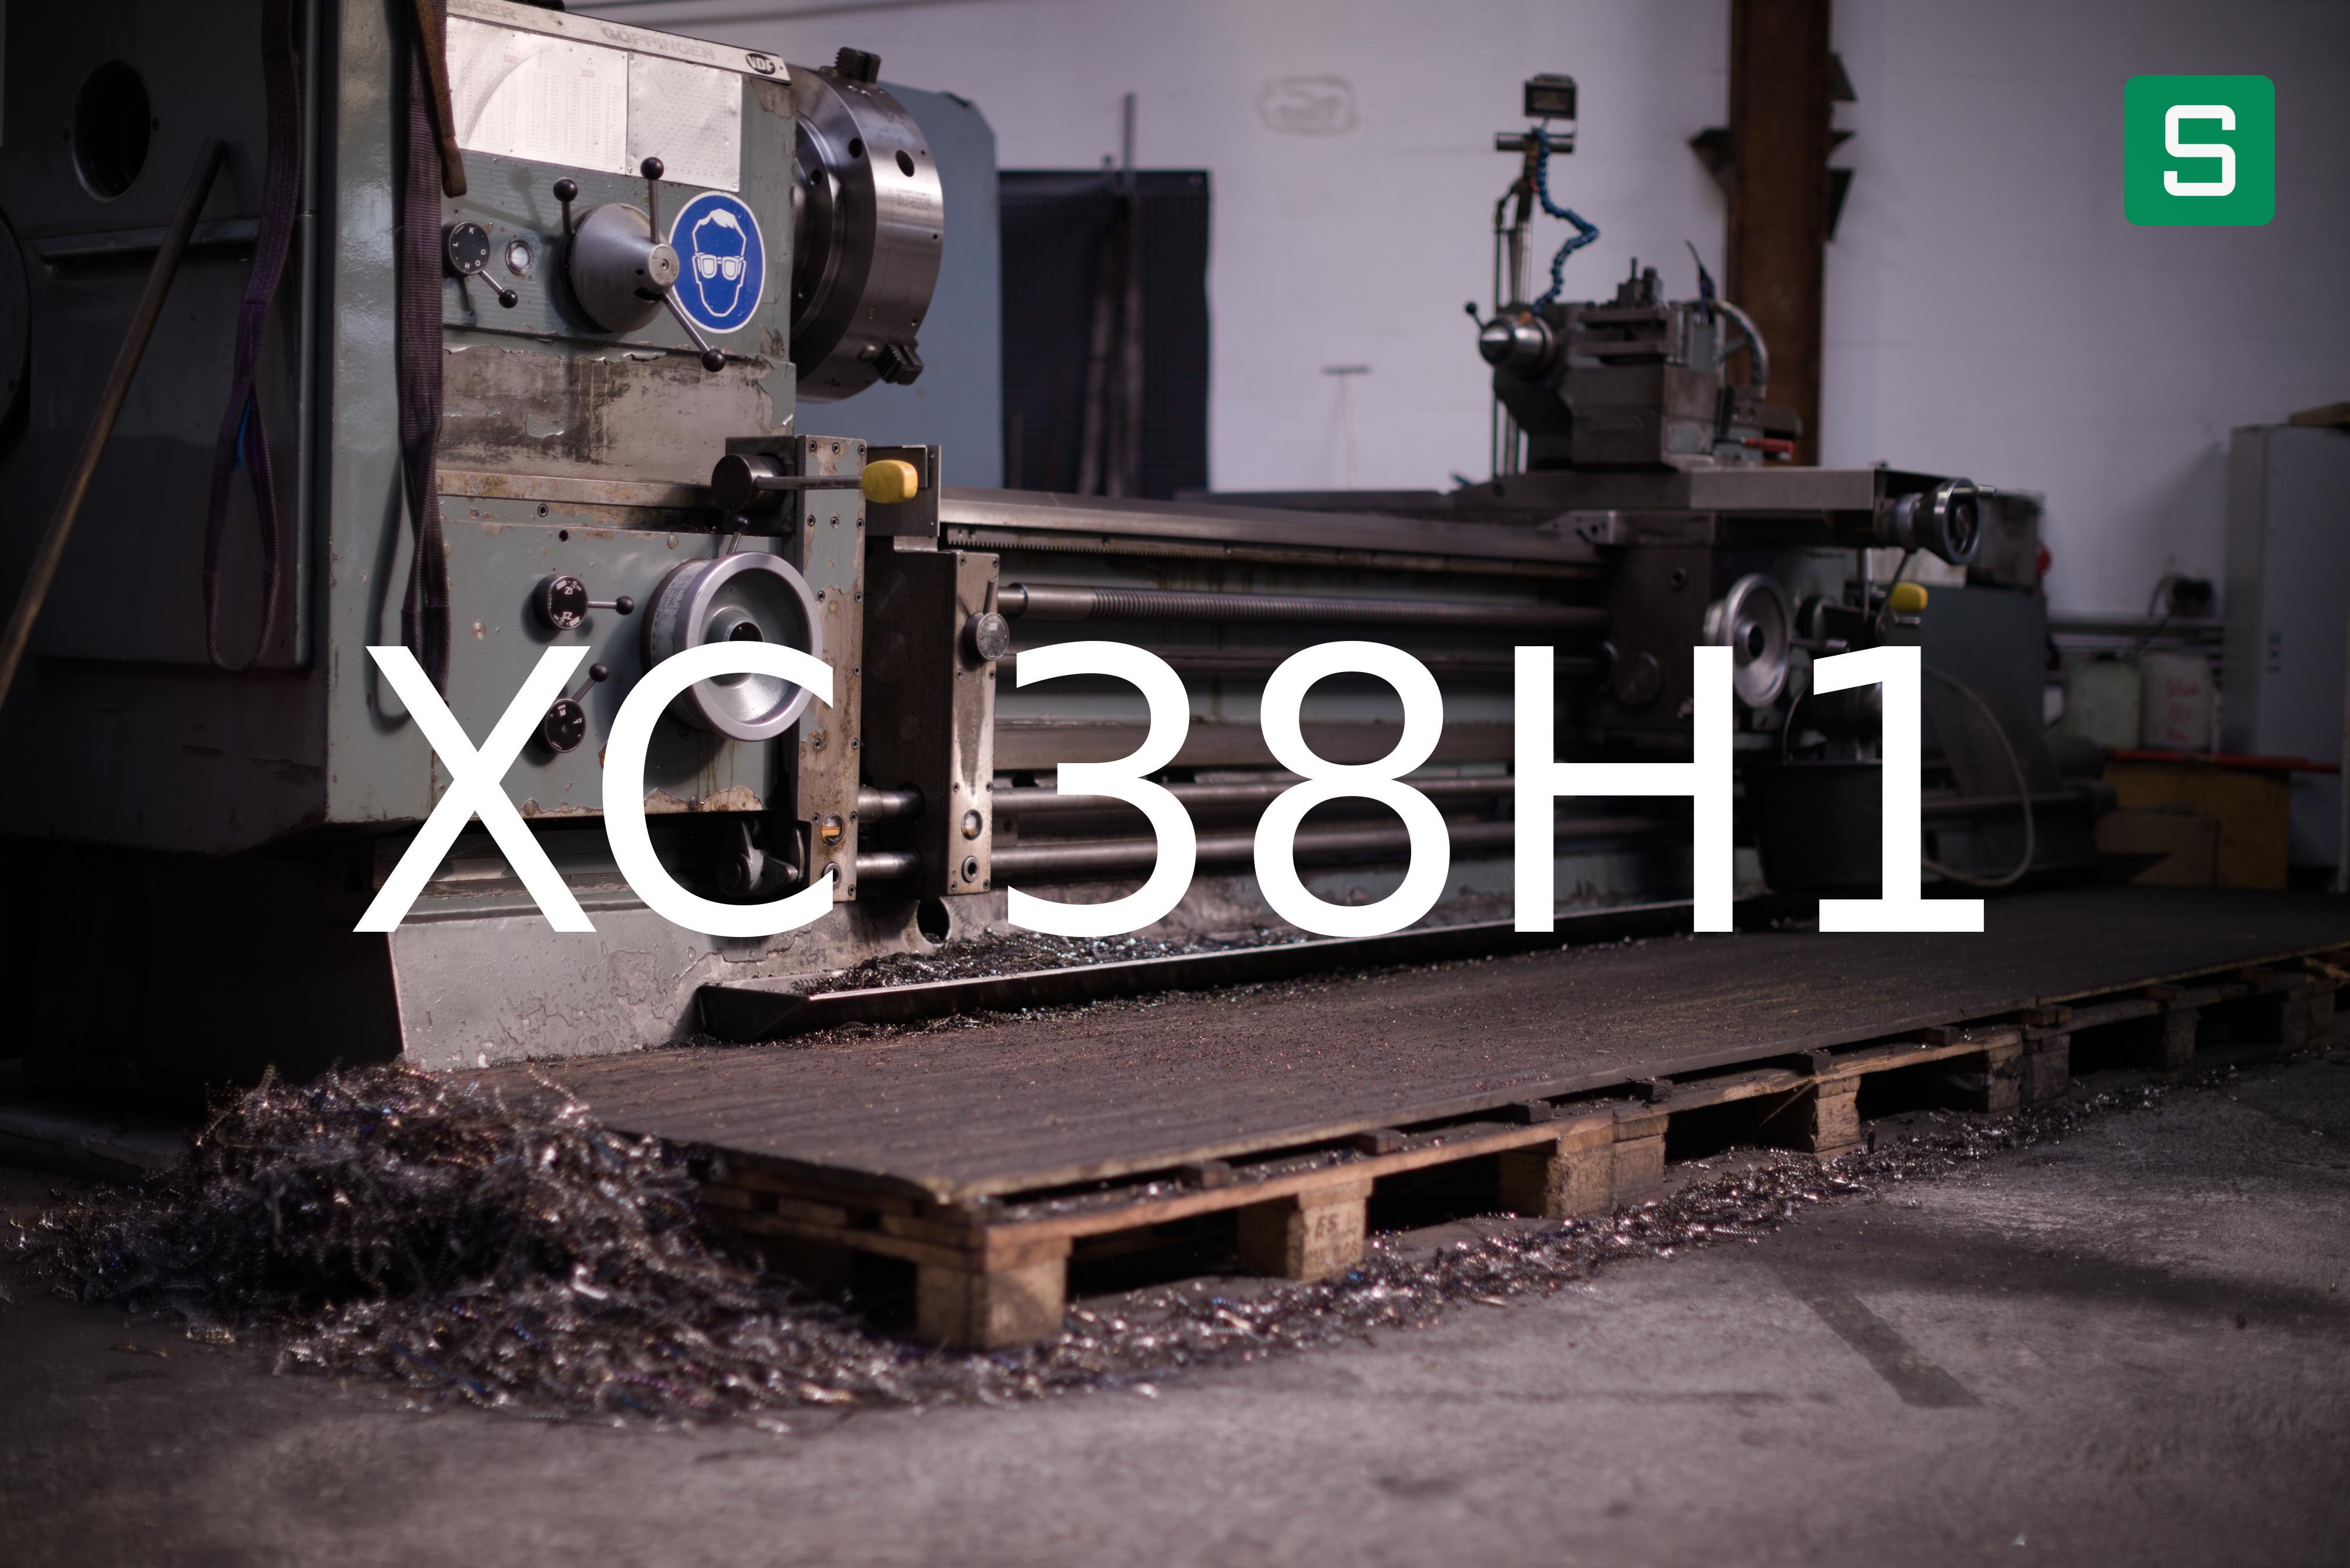 Steel Material: XC 38H1